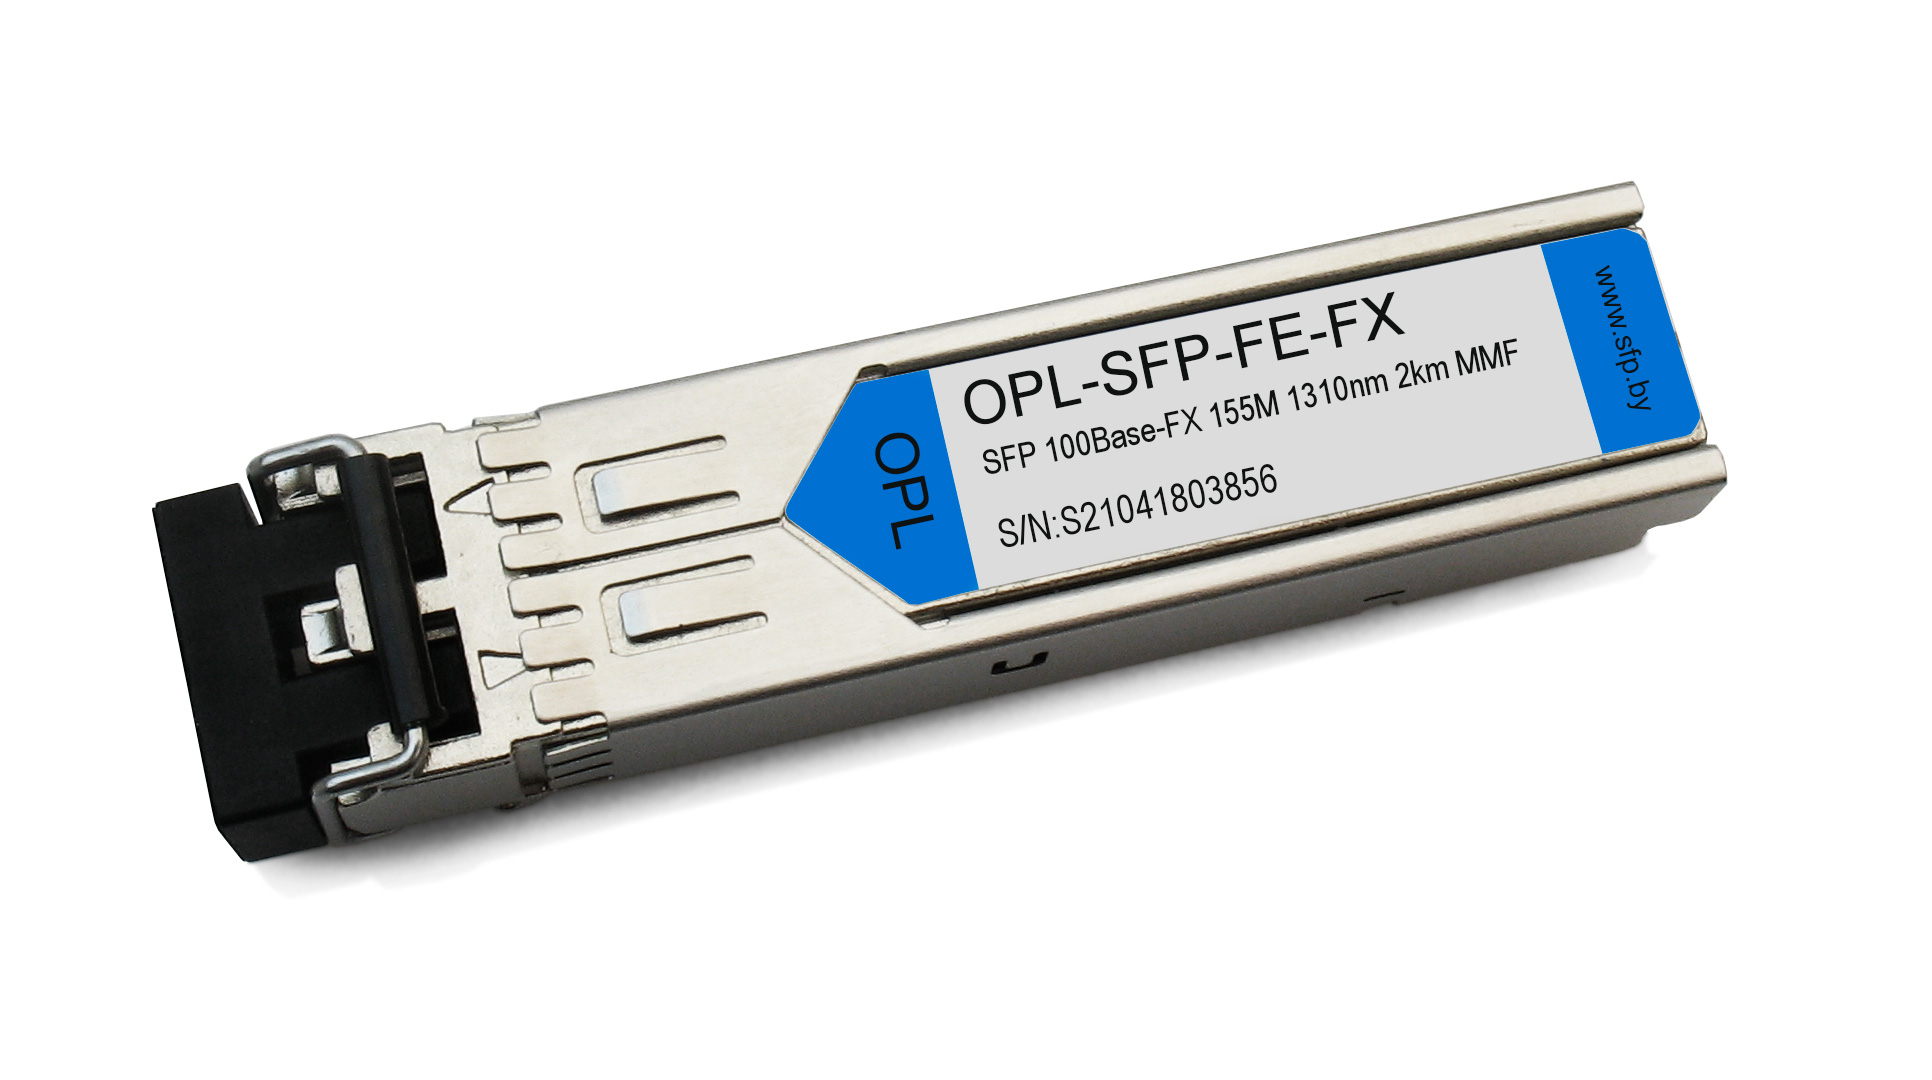 OPL-SFP-FE-FX